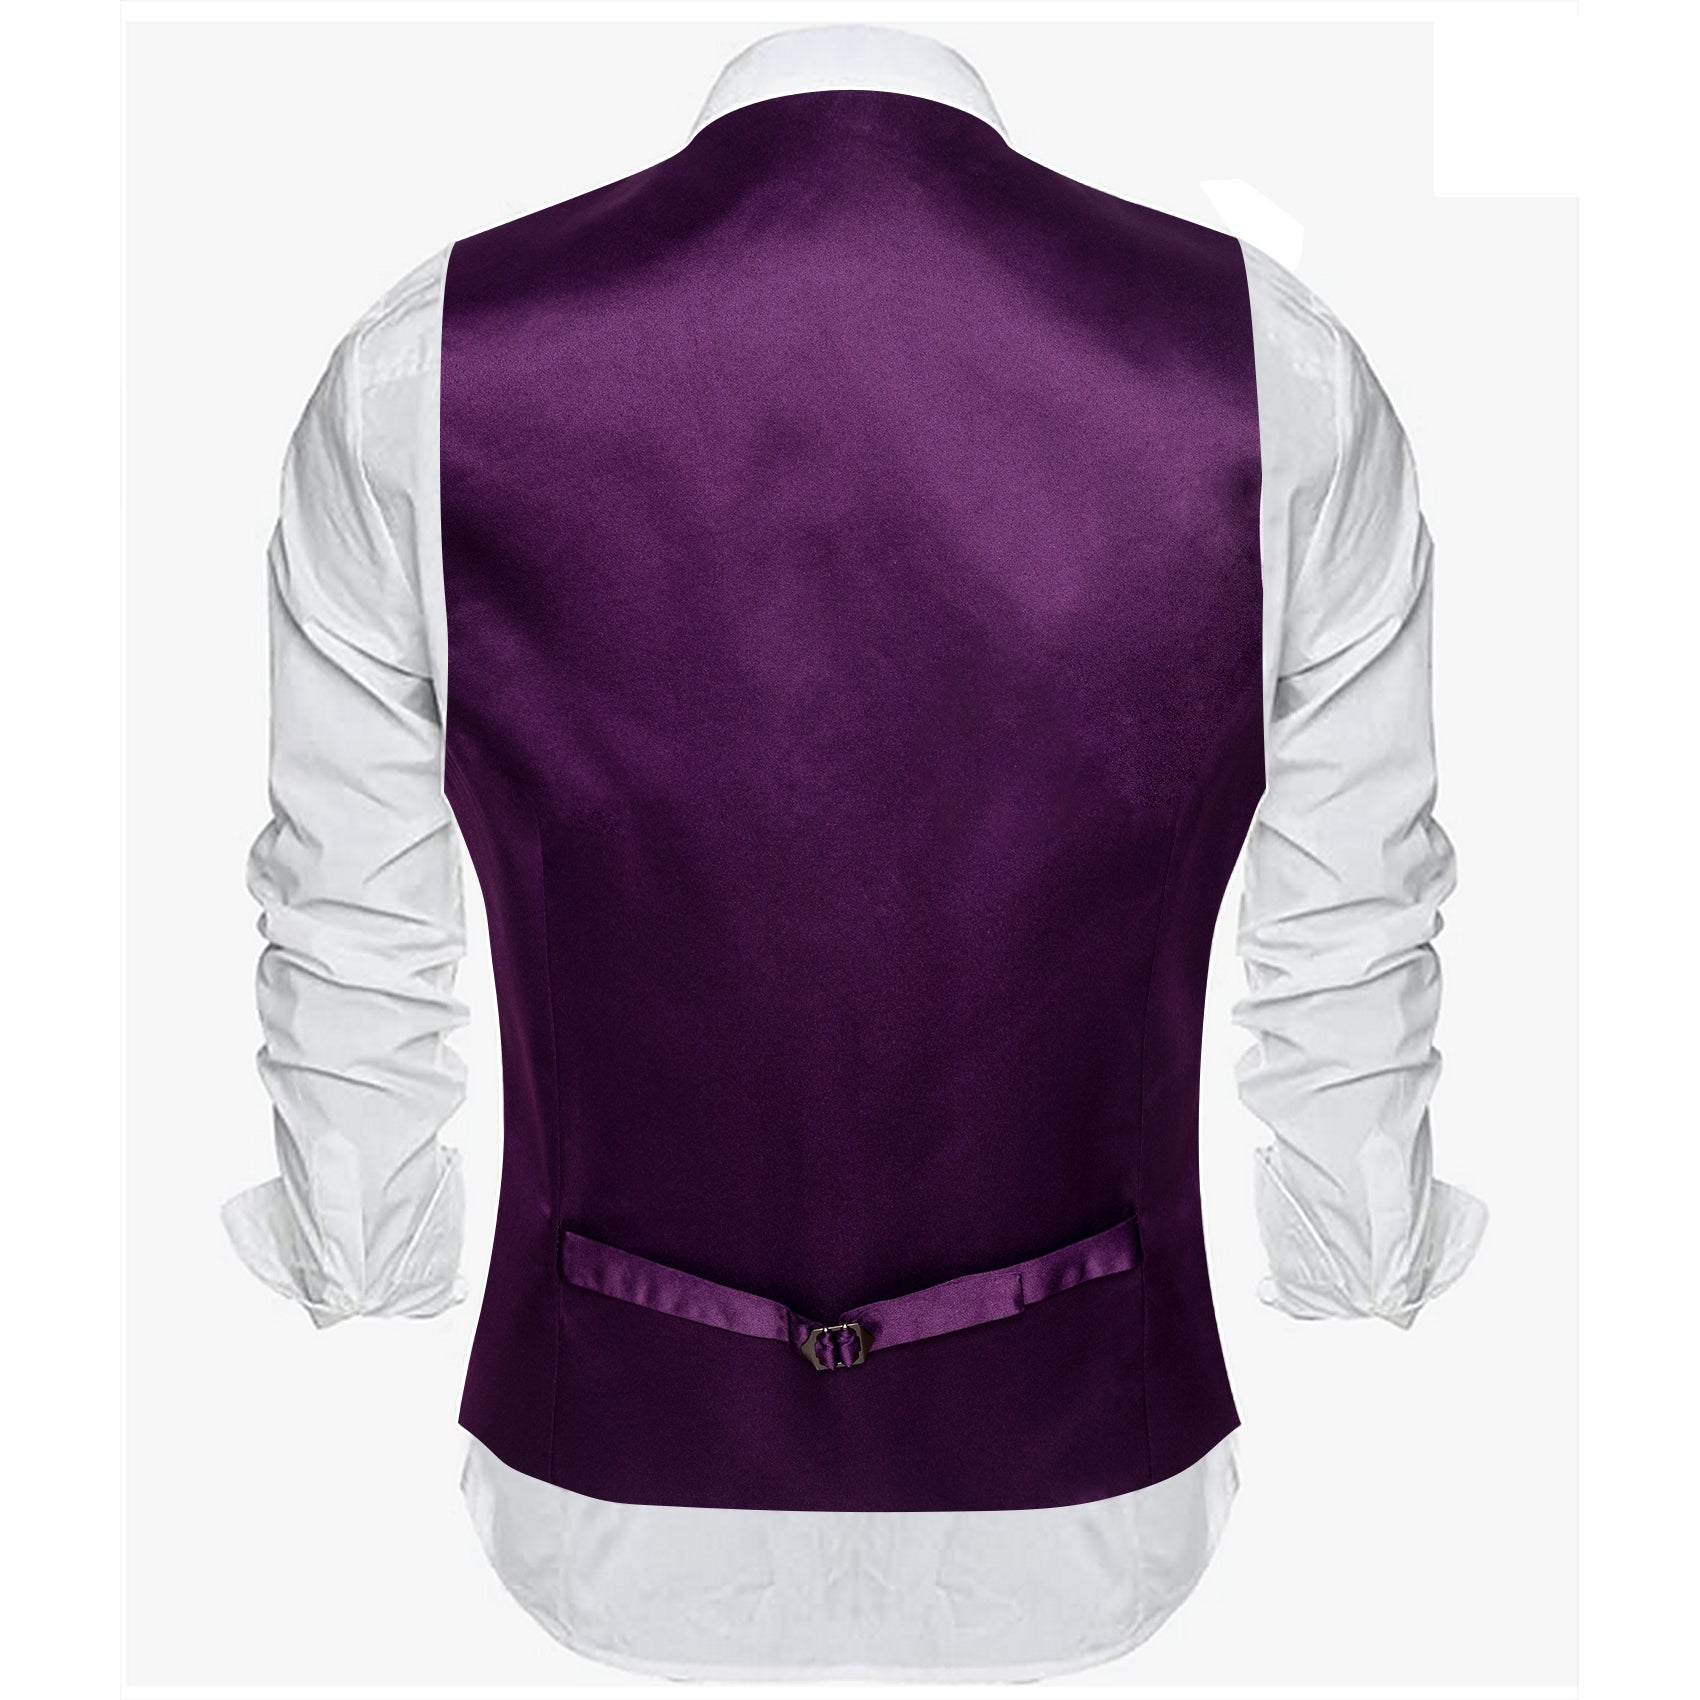 Luxury Purple Solid Silk Necktie Bowtie Hanky Cufflinks Waistcoat Vest Set